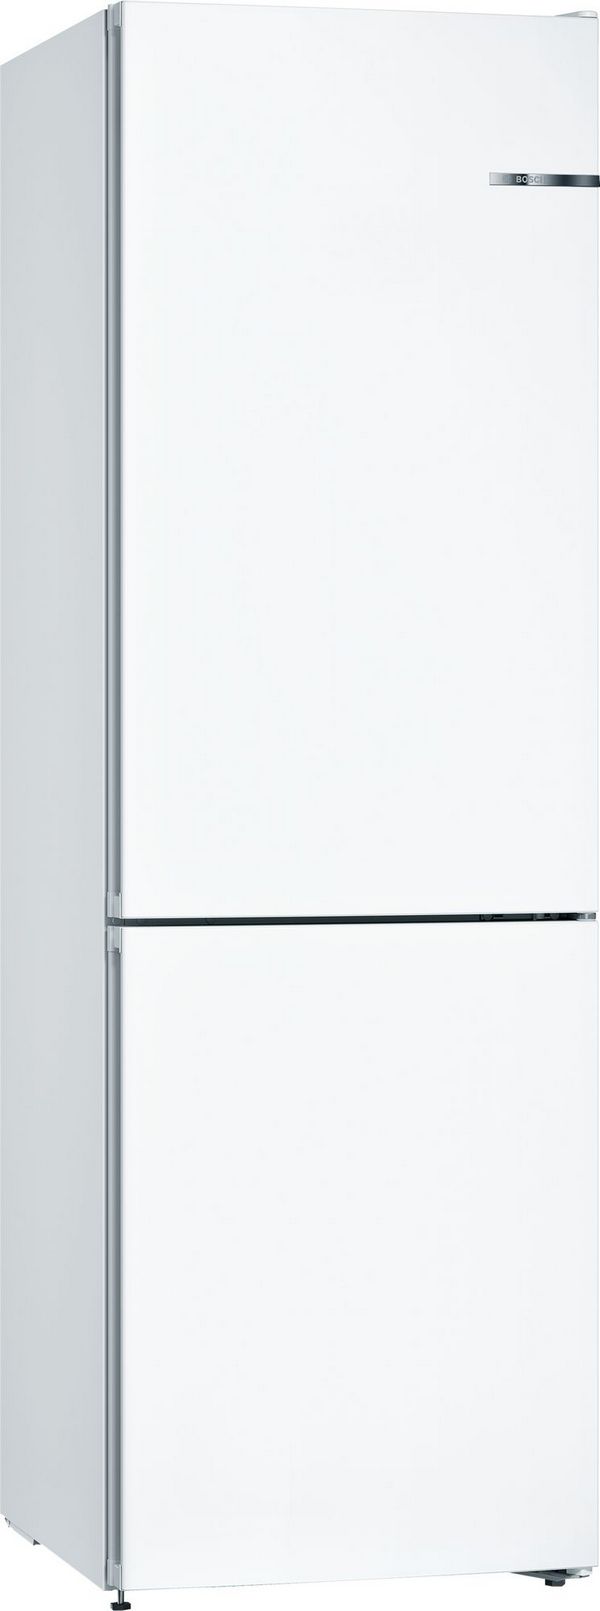 Bosch KGN36NW21R refrigerator